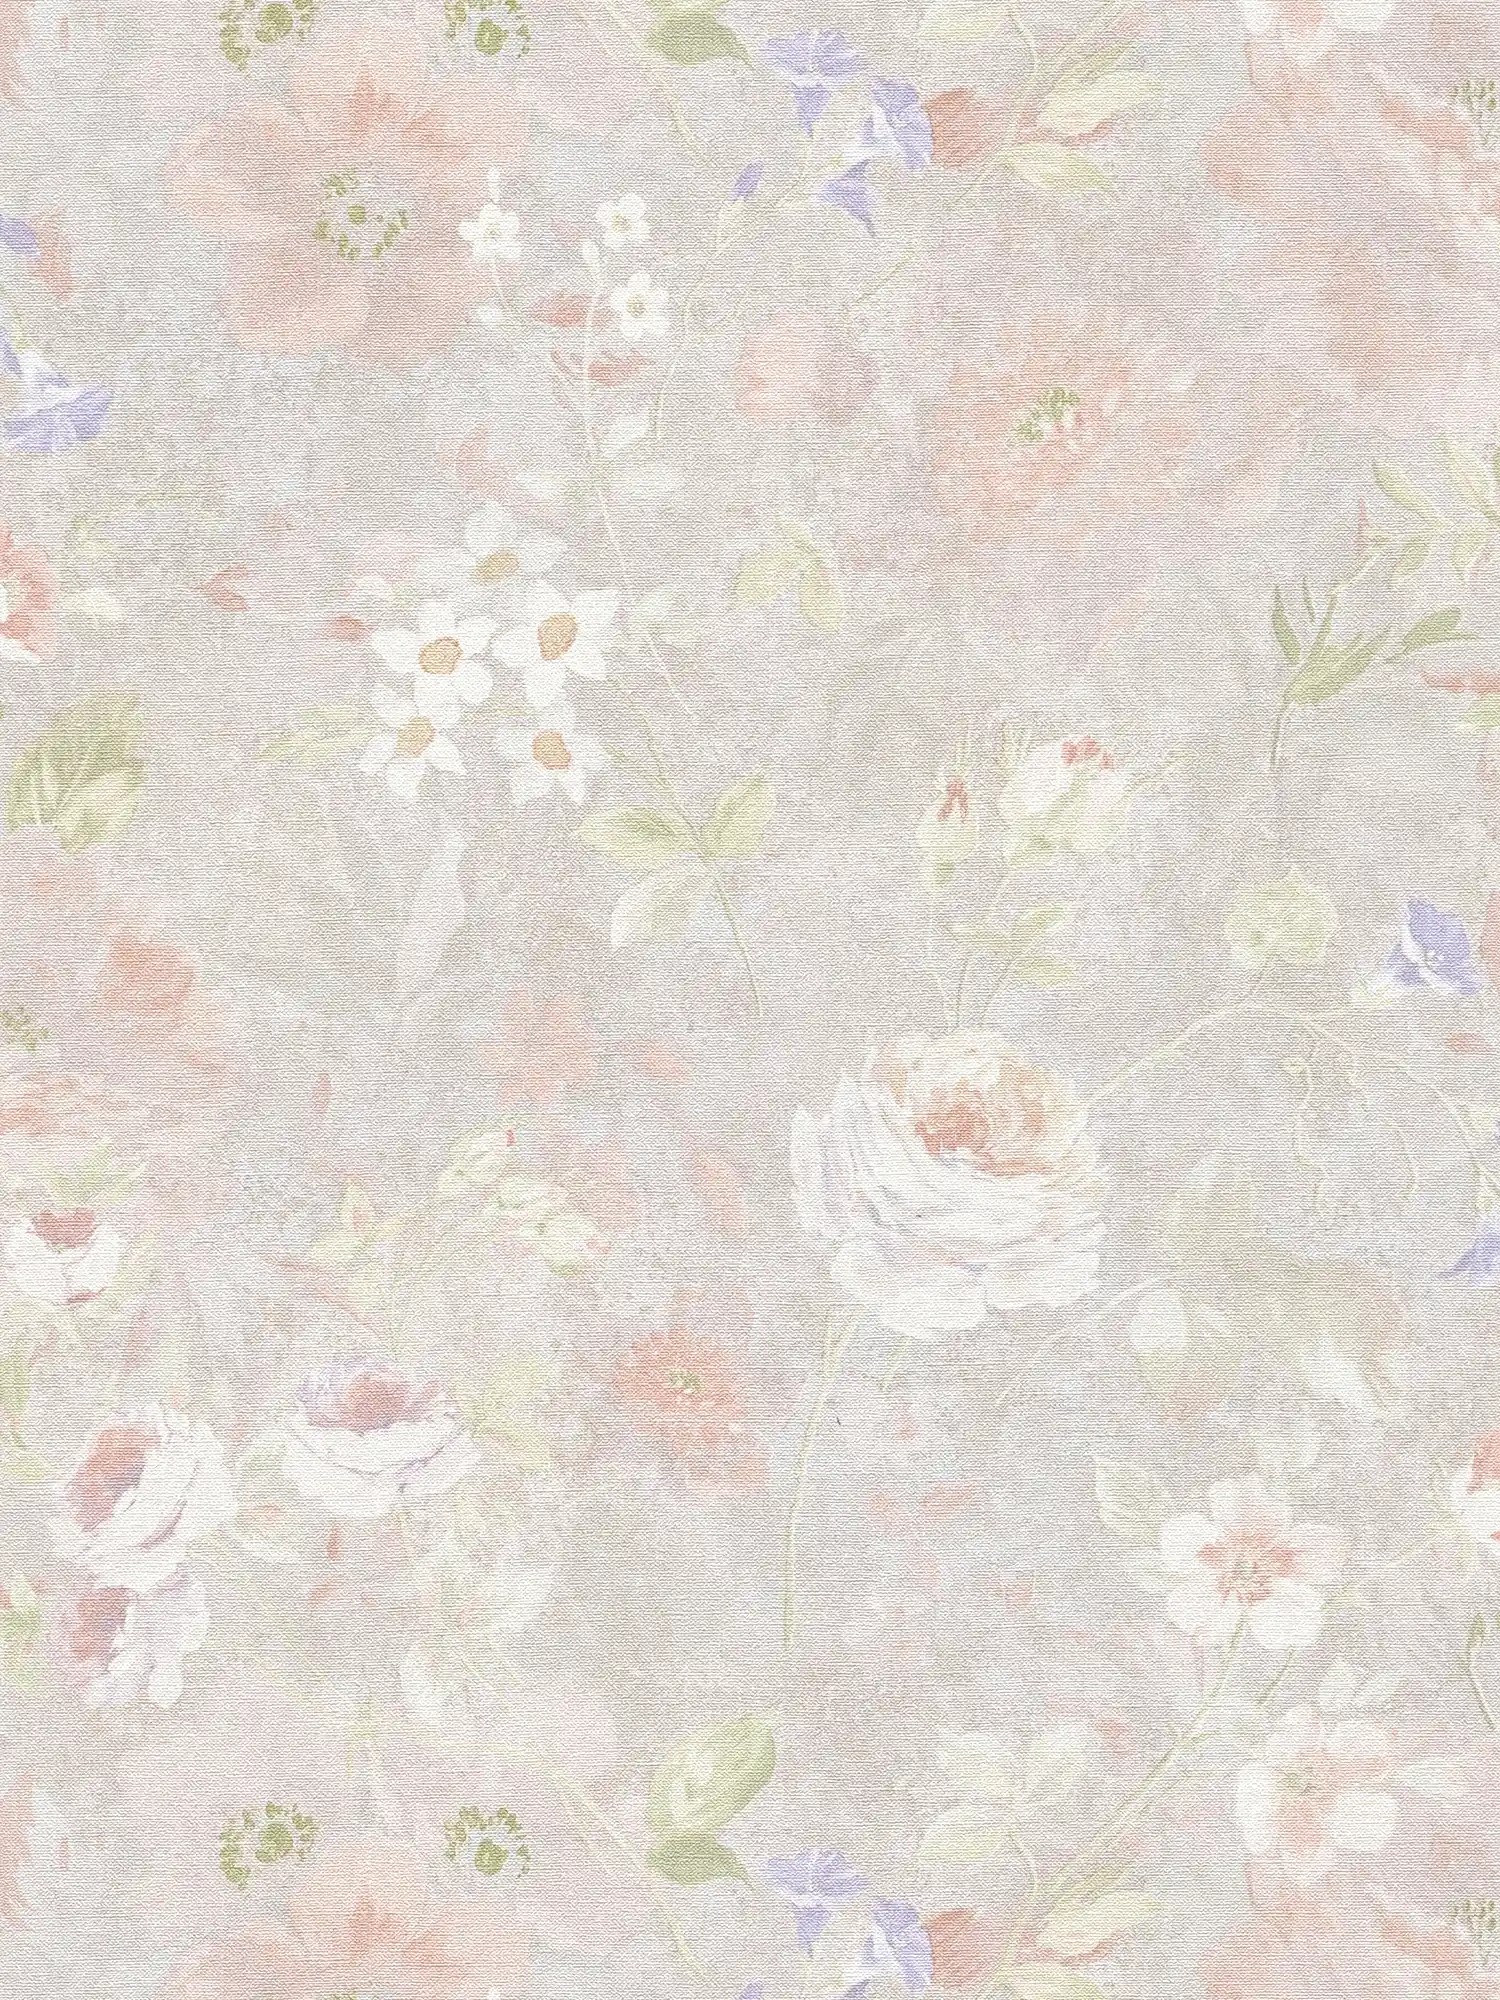 Blumentapete gemaltes Muster PVC-frei – Grau, Bunt, Rosa
